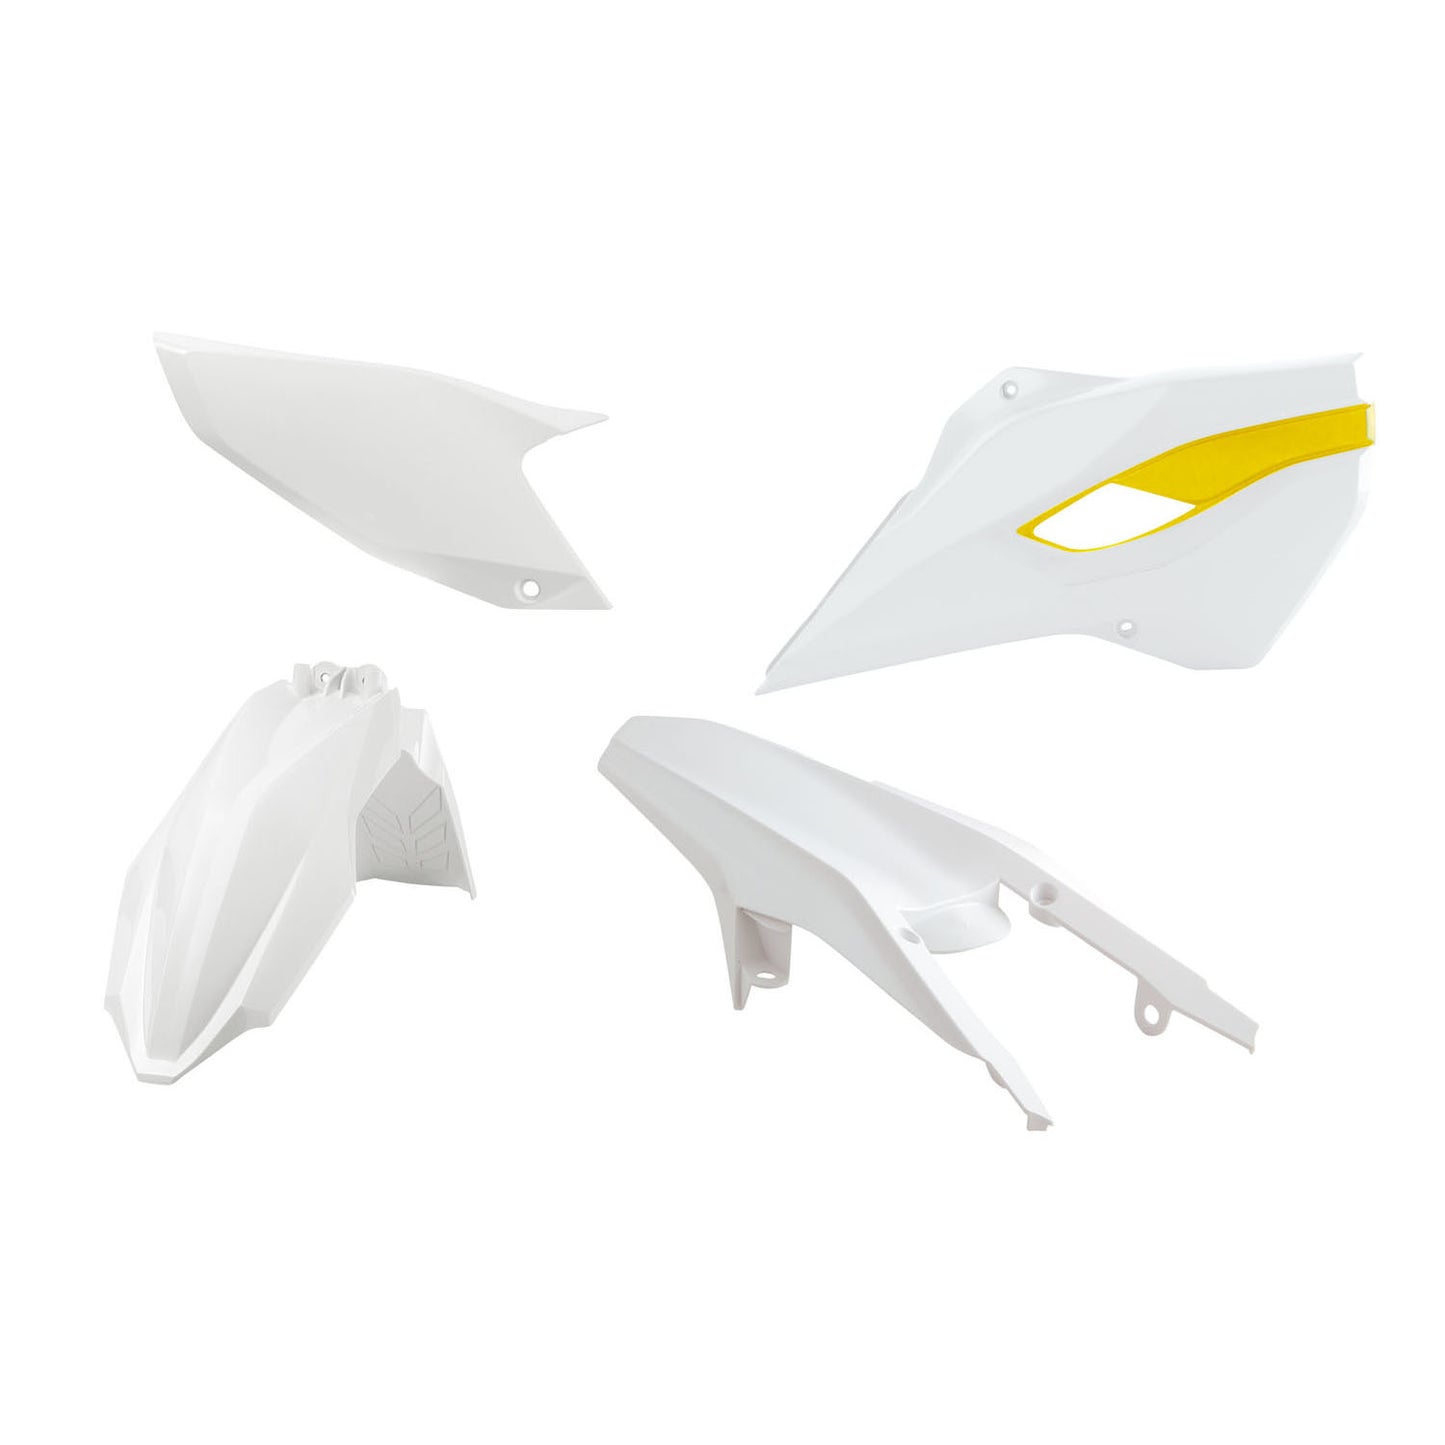 Racetech Husqvarna 4 Piece Plastic Kit - White/Yellow - EMD Online